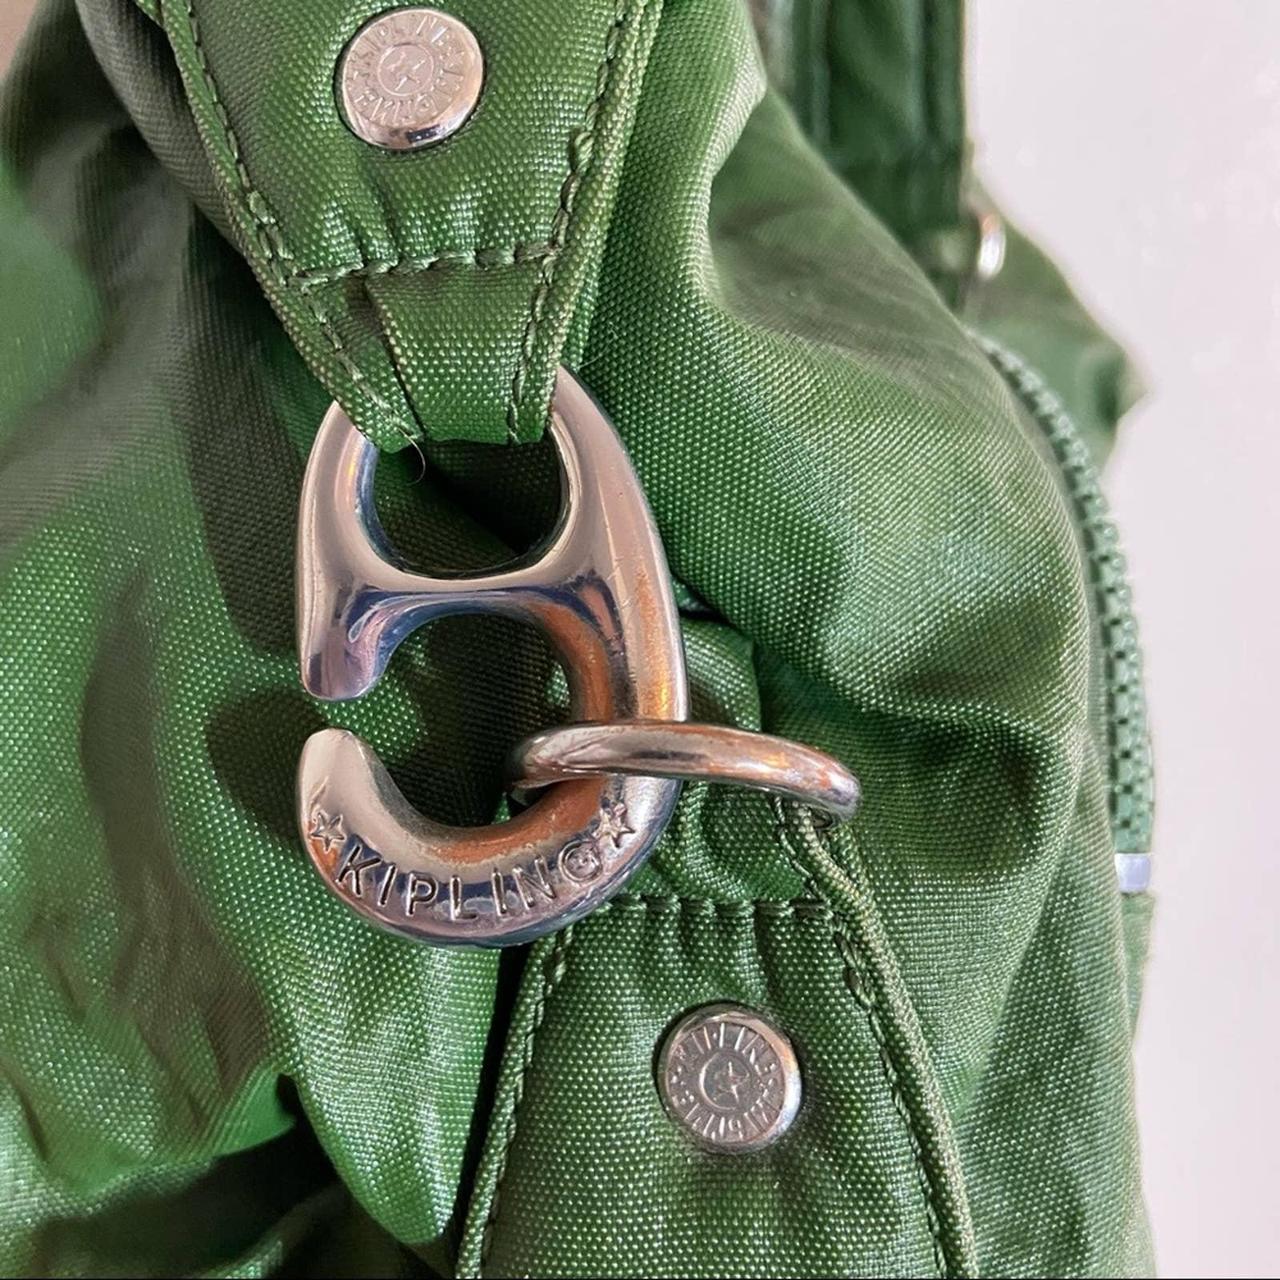 Kipling Women's Green and Silver Bag (2)